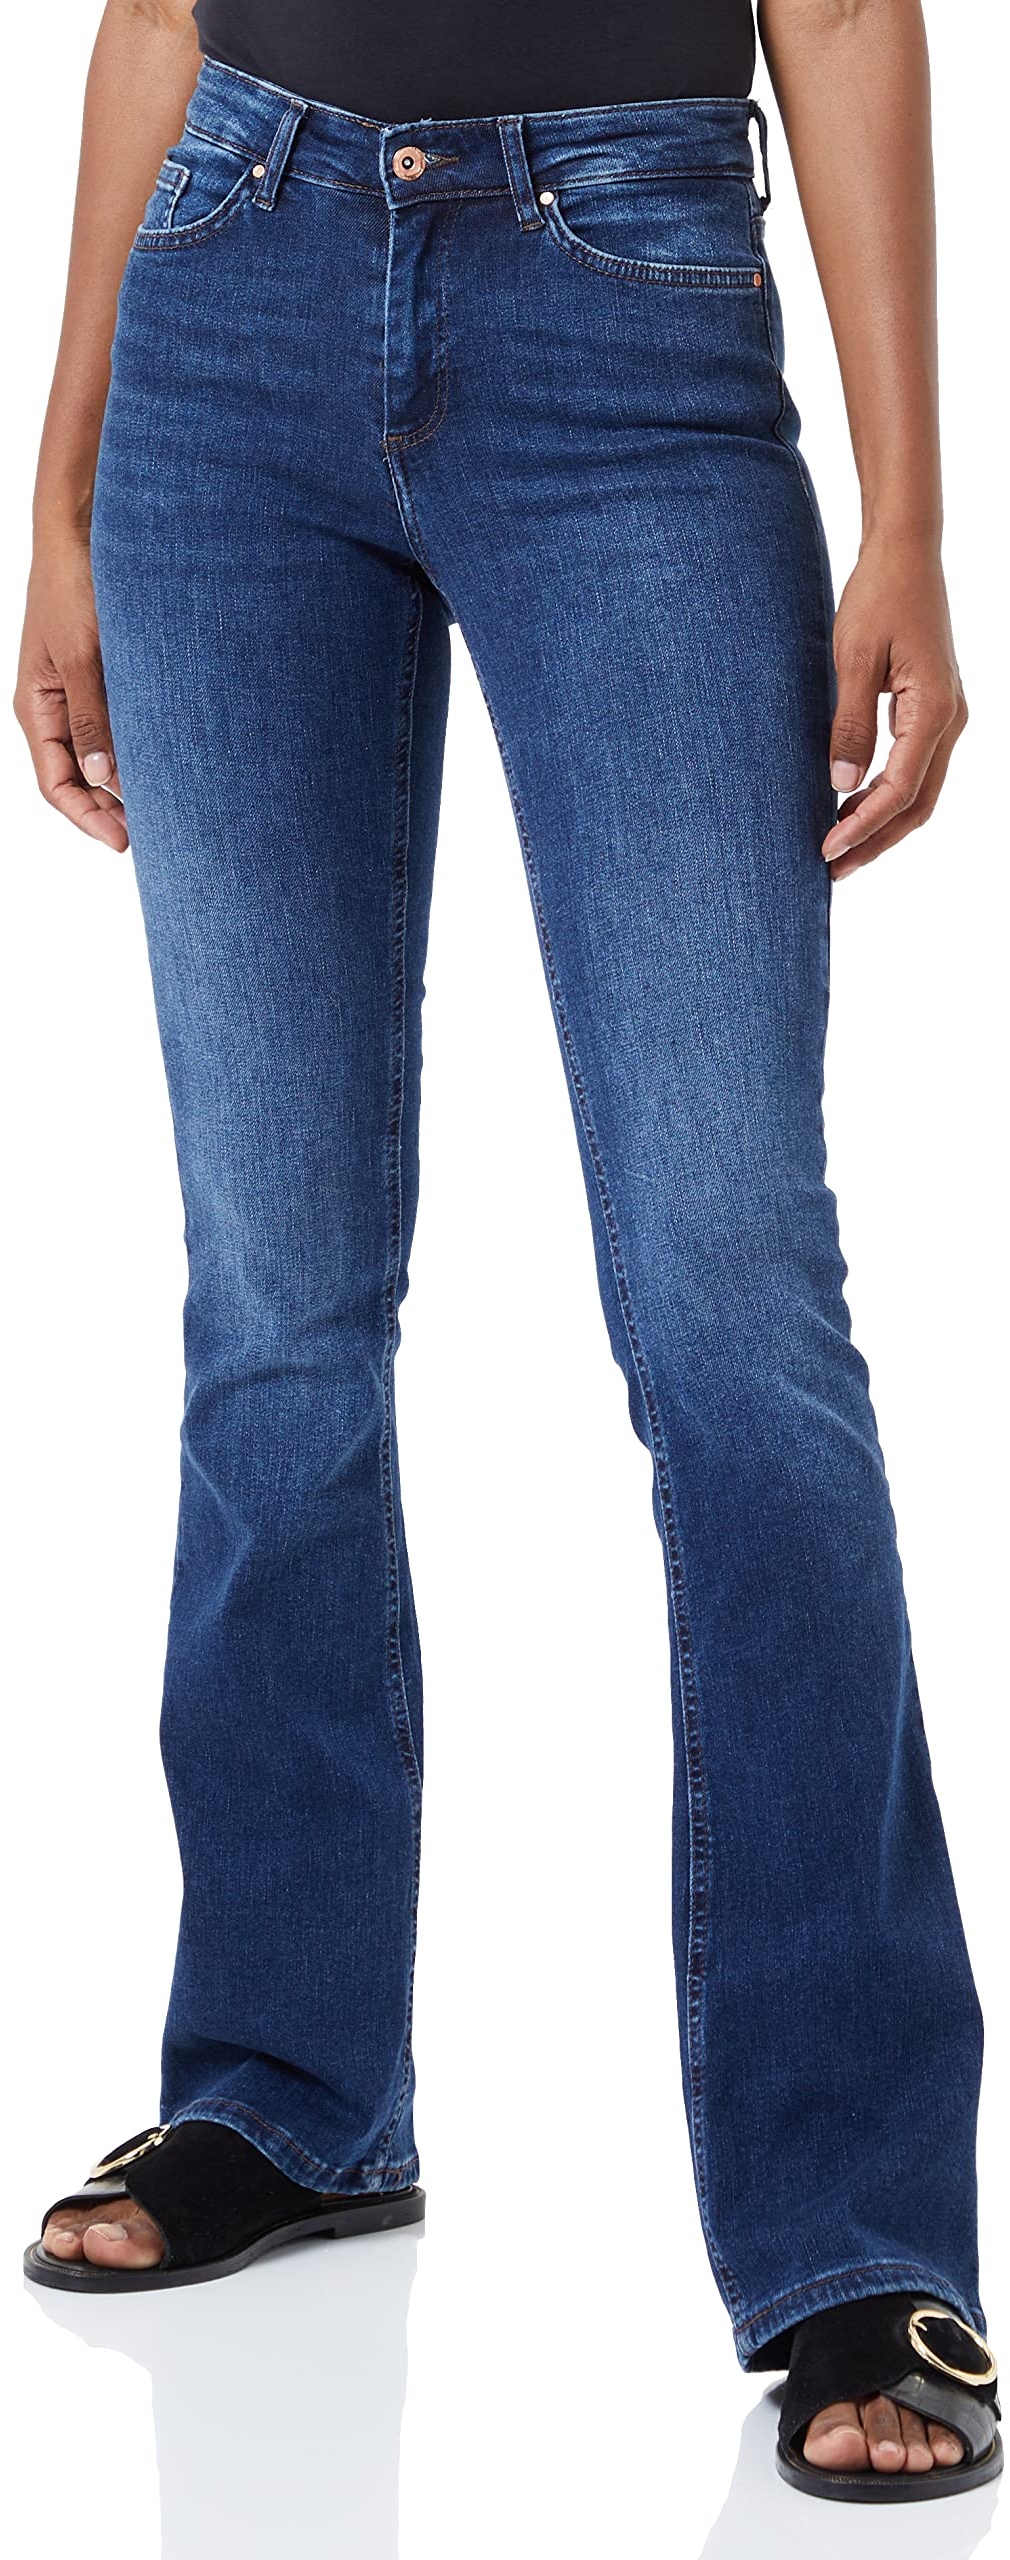 ONLY Damen Onlblush Mid flared Dnm Tai021 Noos Jeans, Dark Blue Denim, M / 32L EU